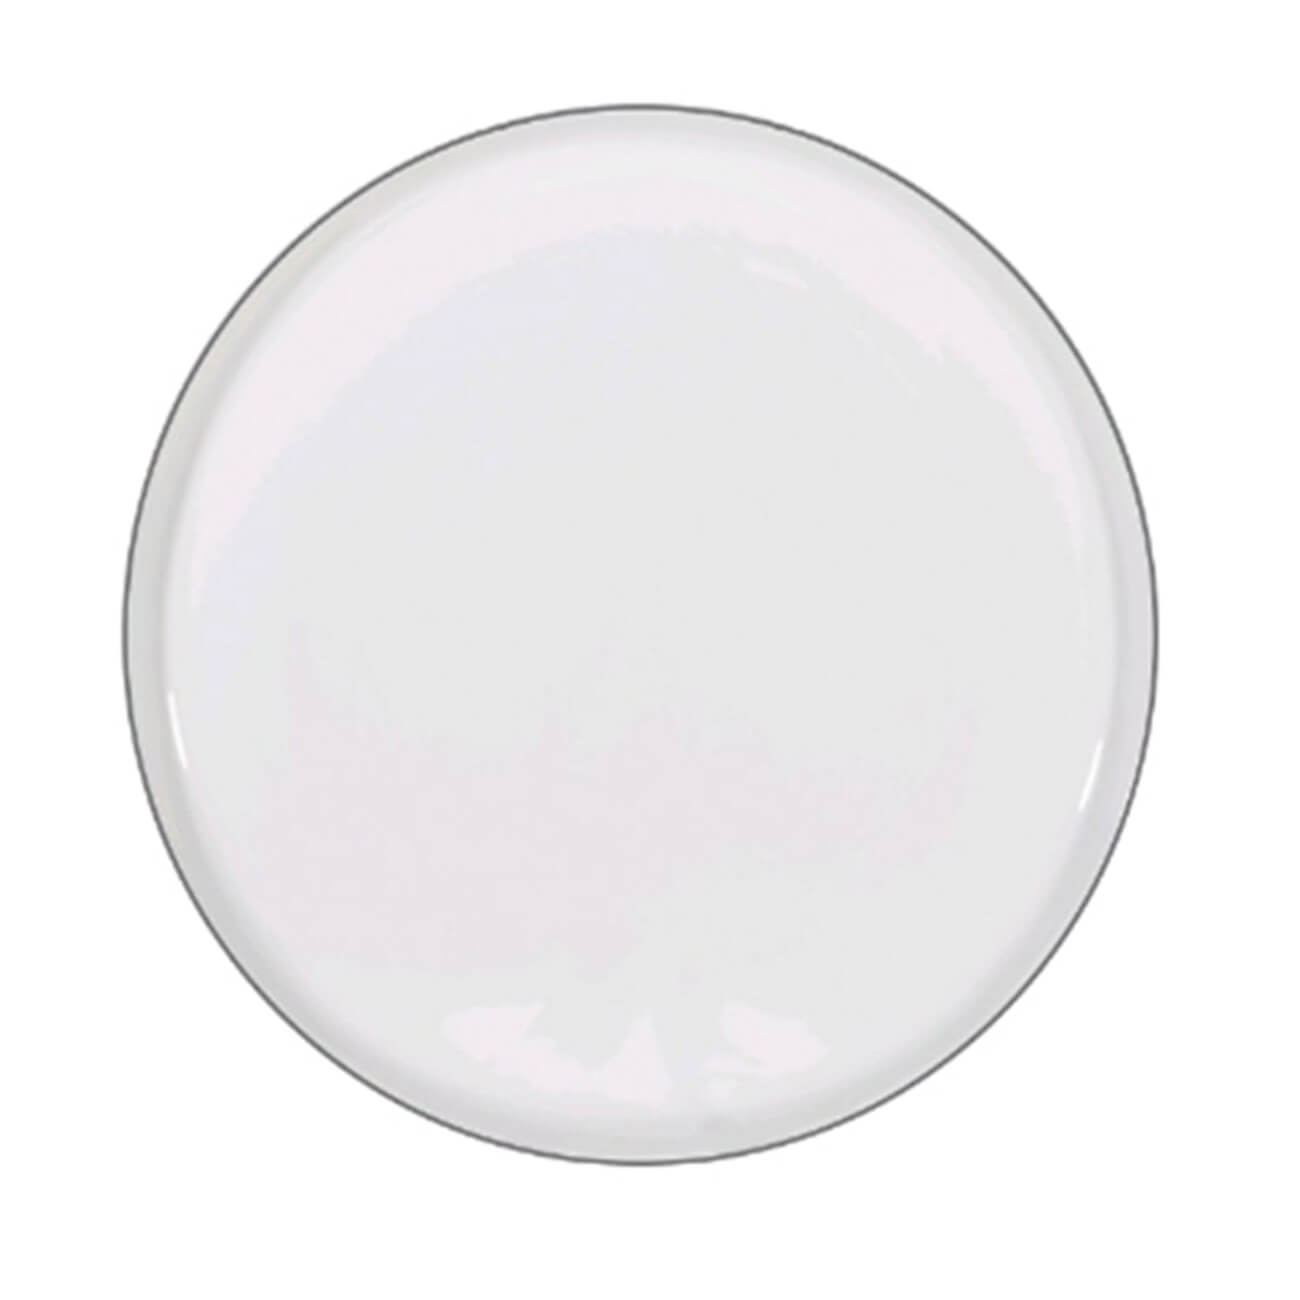 Тарелка десертная, 20 см, 2 шт, фарфор F, белая, Ideal silver ложка десертная из нержавеющей стали magistro